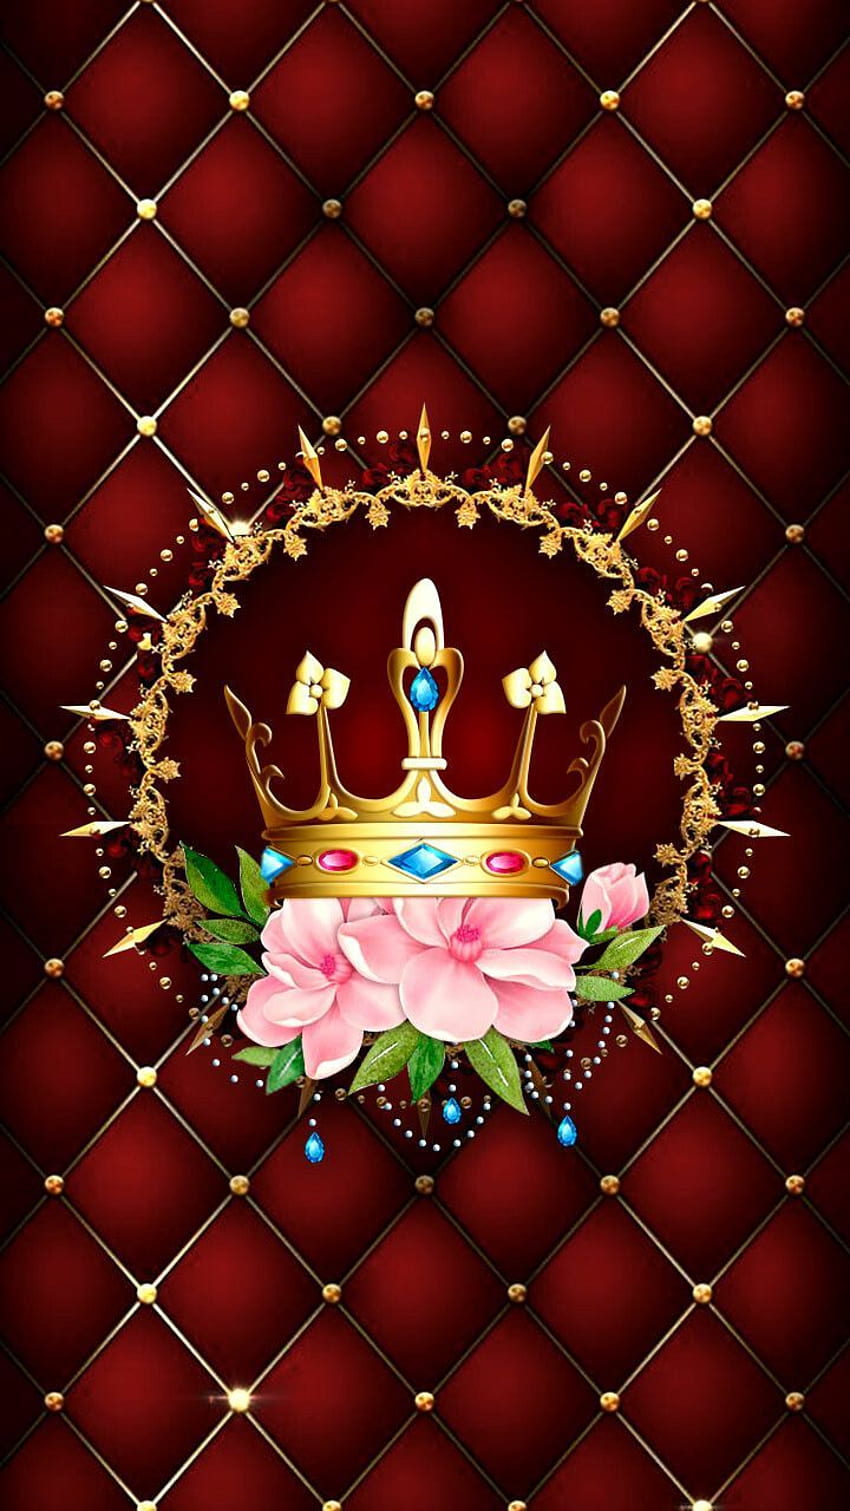 Crown Royal wallpaper by scottk74  Download on ZEDGE  a77b